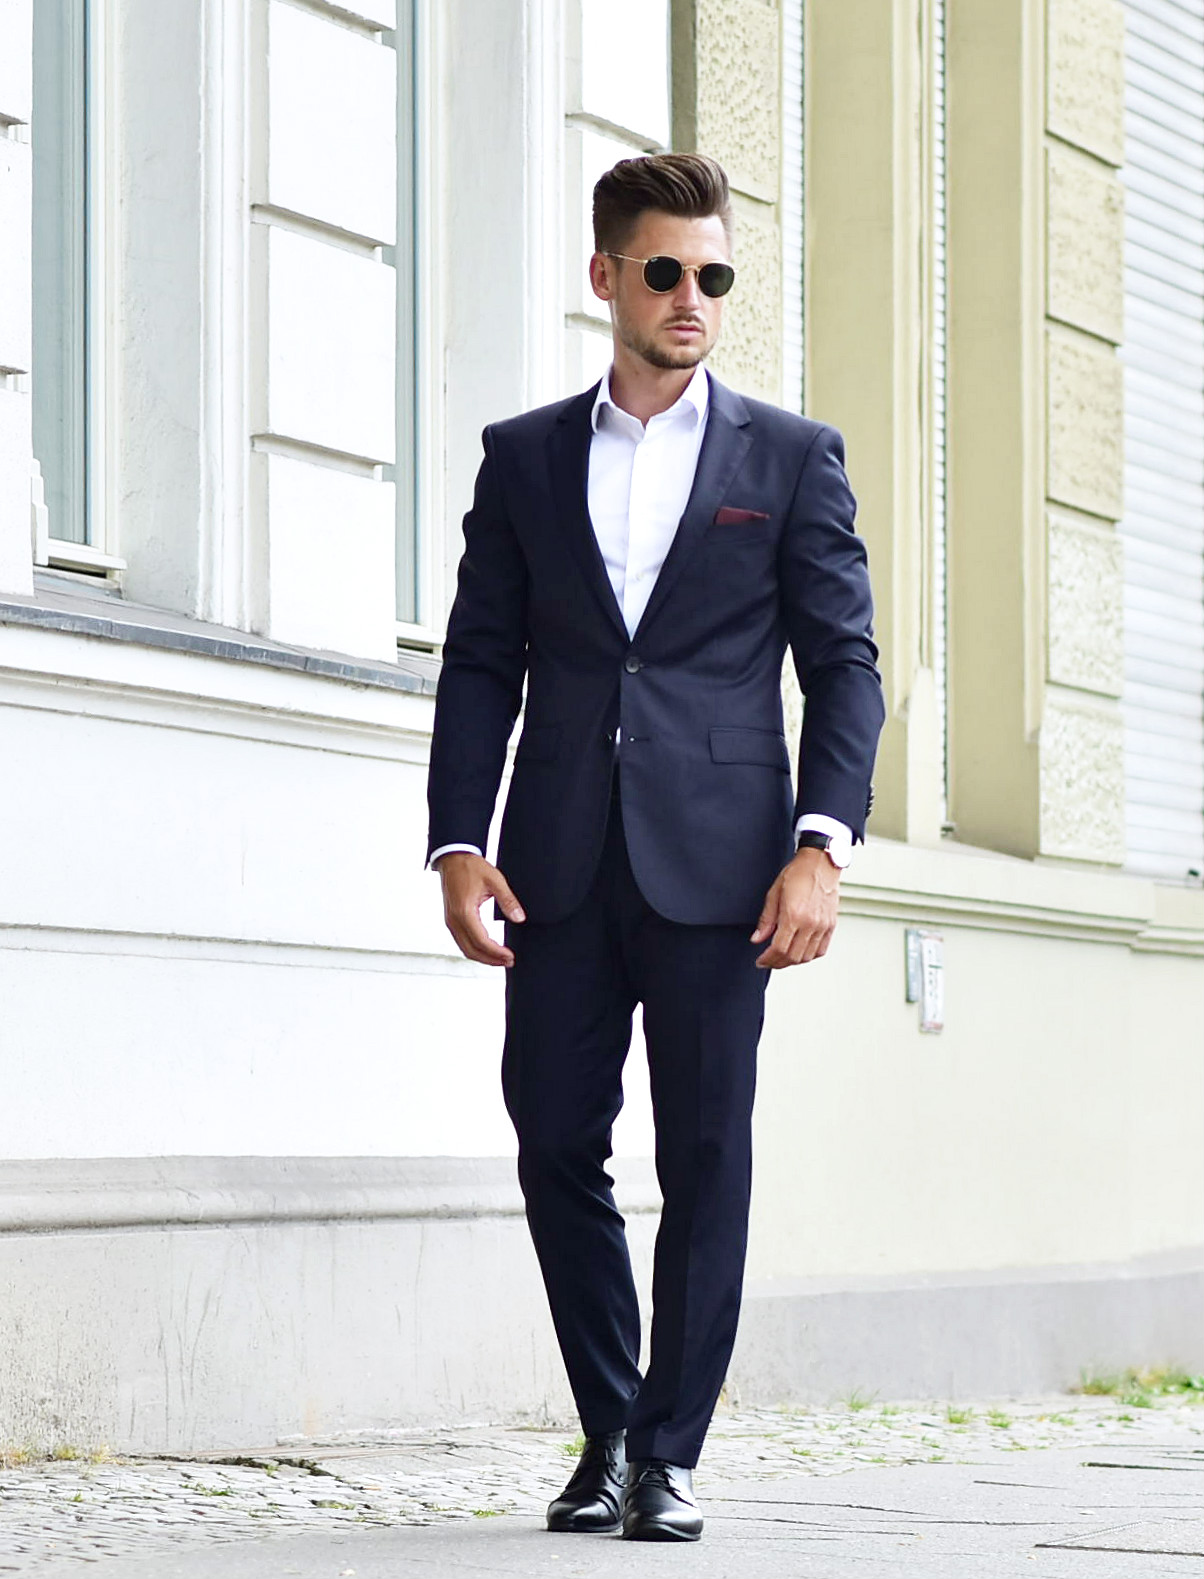 Tommeezjerry-Styleblog-Männerblog-Männer-Modeblog-Berlin-Berlinblog-Männermodeblog-Outfit-Classy-Chic-Suit-Anzug-Hugo-Boss-Nationalmannschaft-Deutschland-Marineblau-Suit-Up-Fashion-Week-Berlin-Sommer-2016